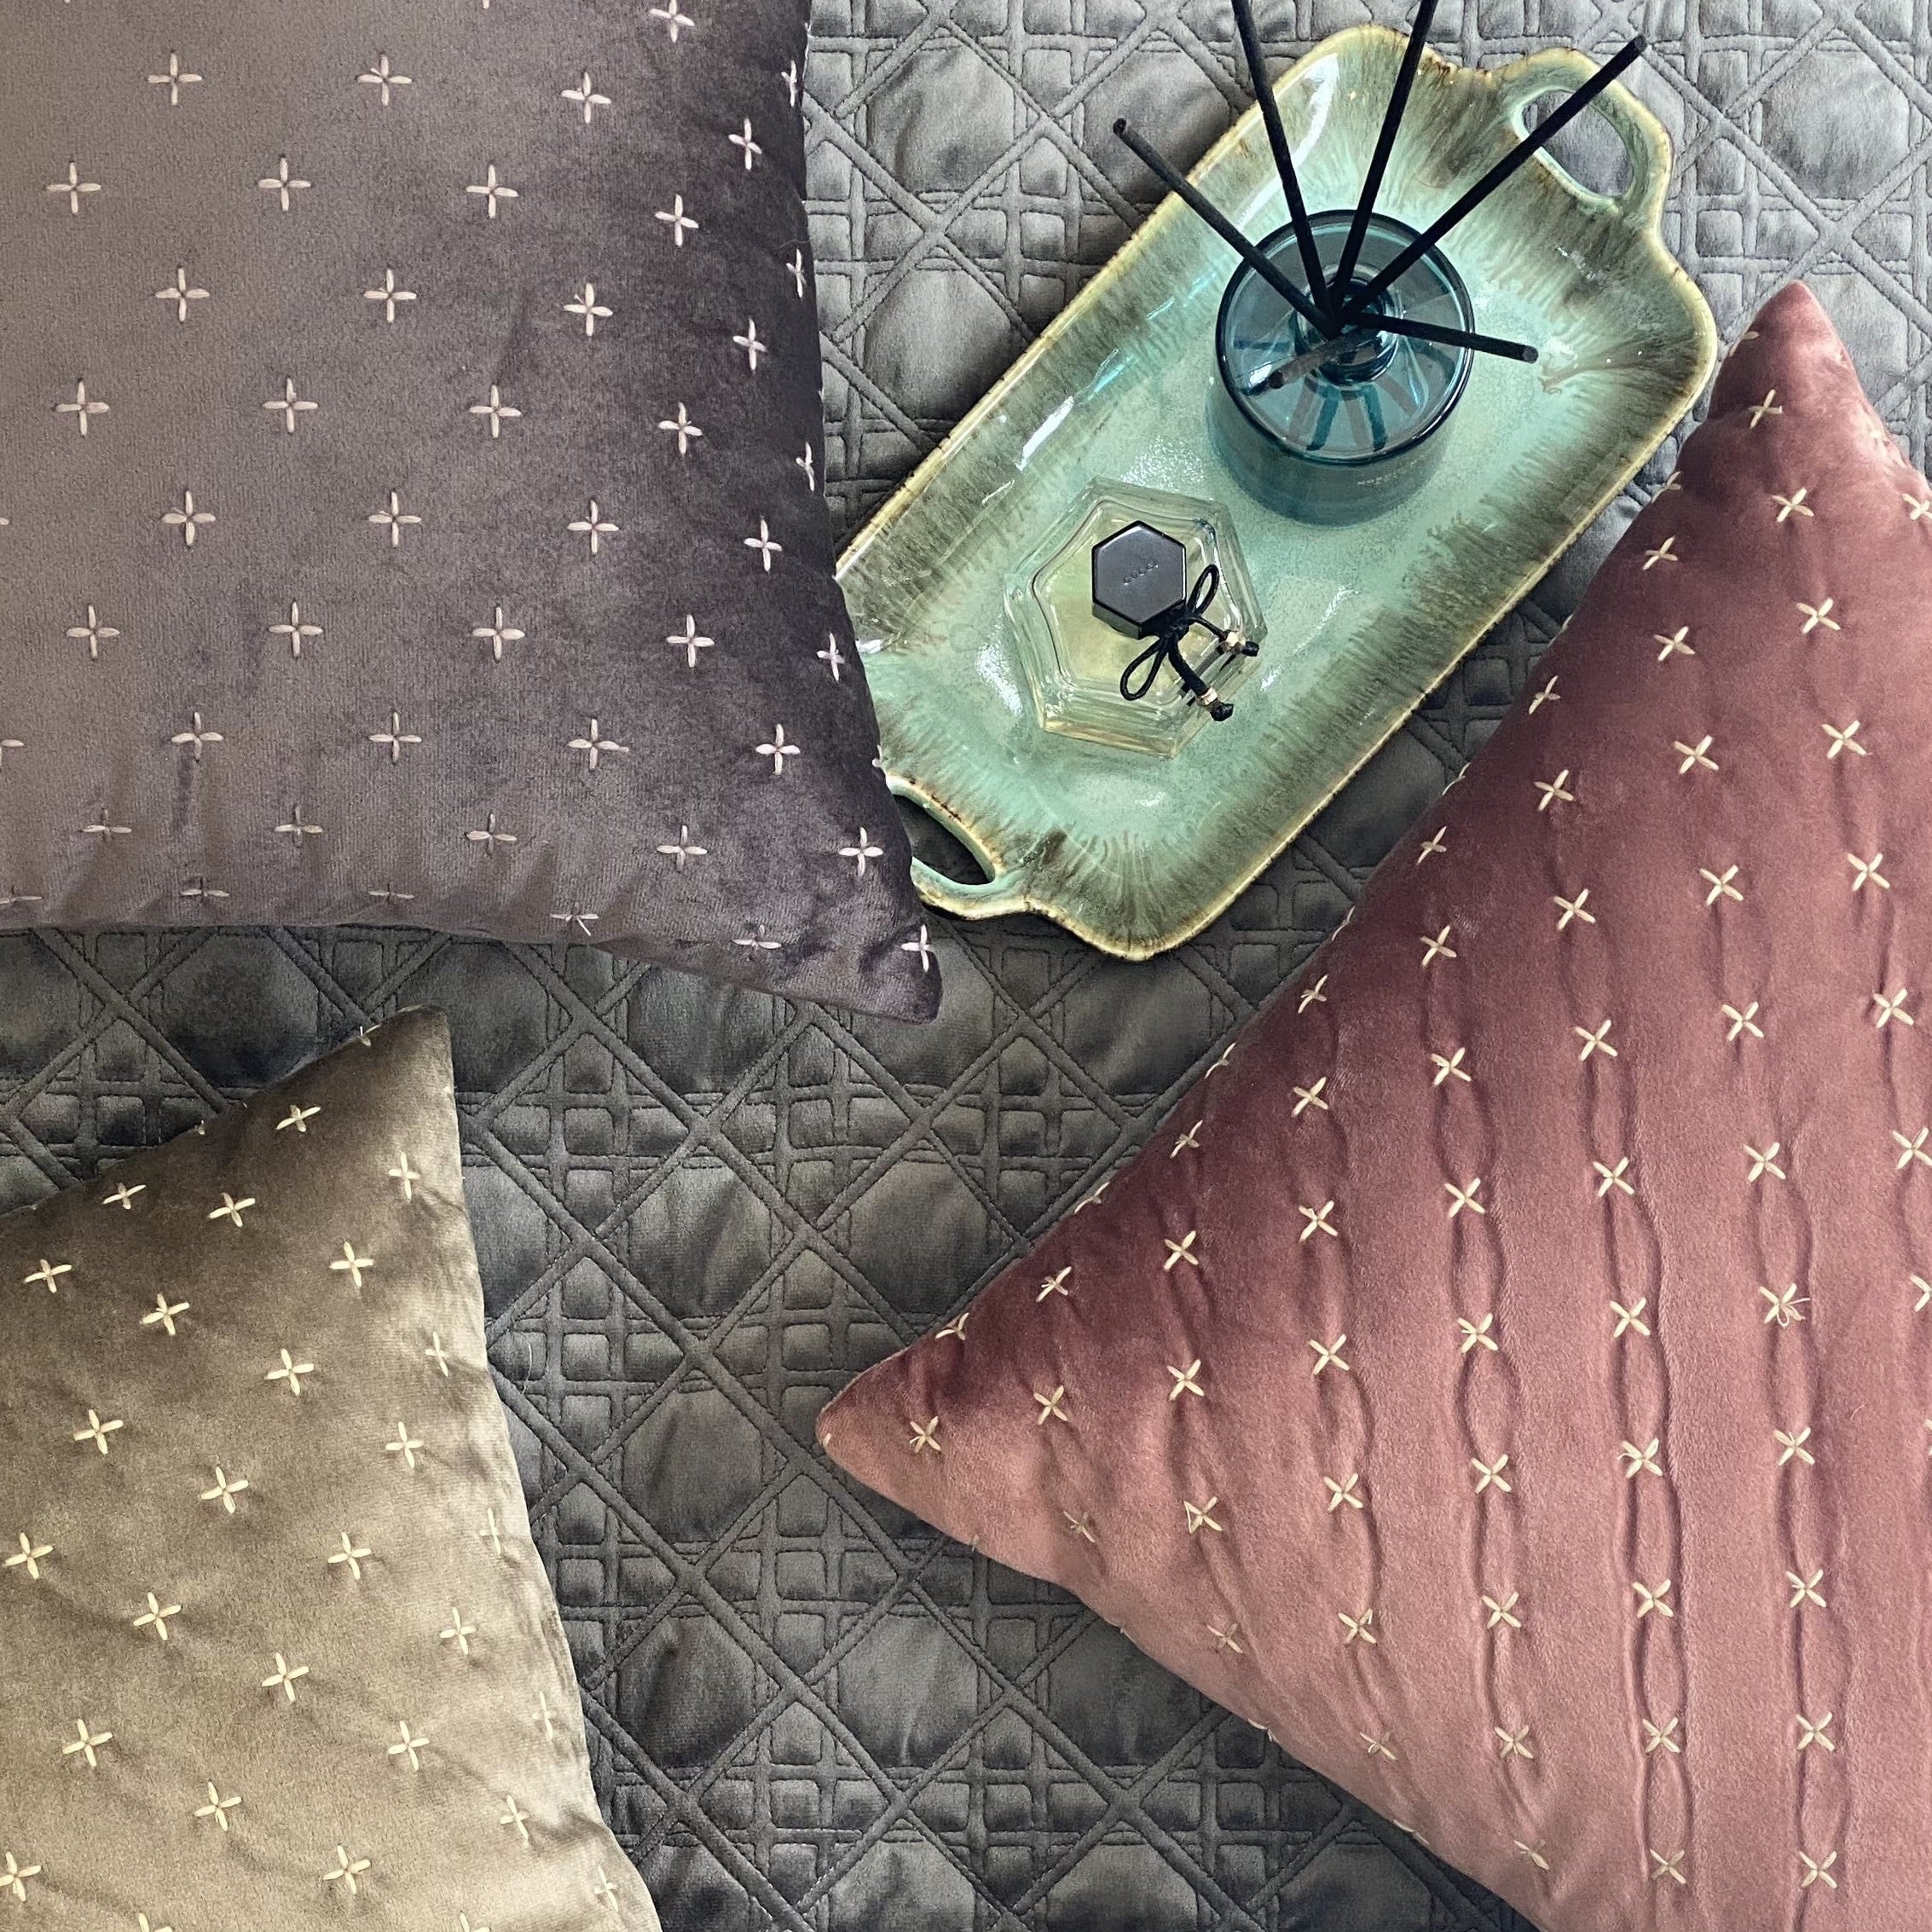 Decorative Sparkle Blush Velvet Cushion Cover 16x16